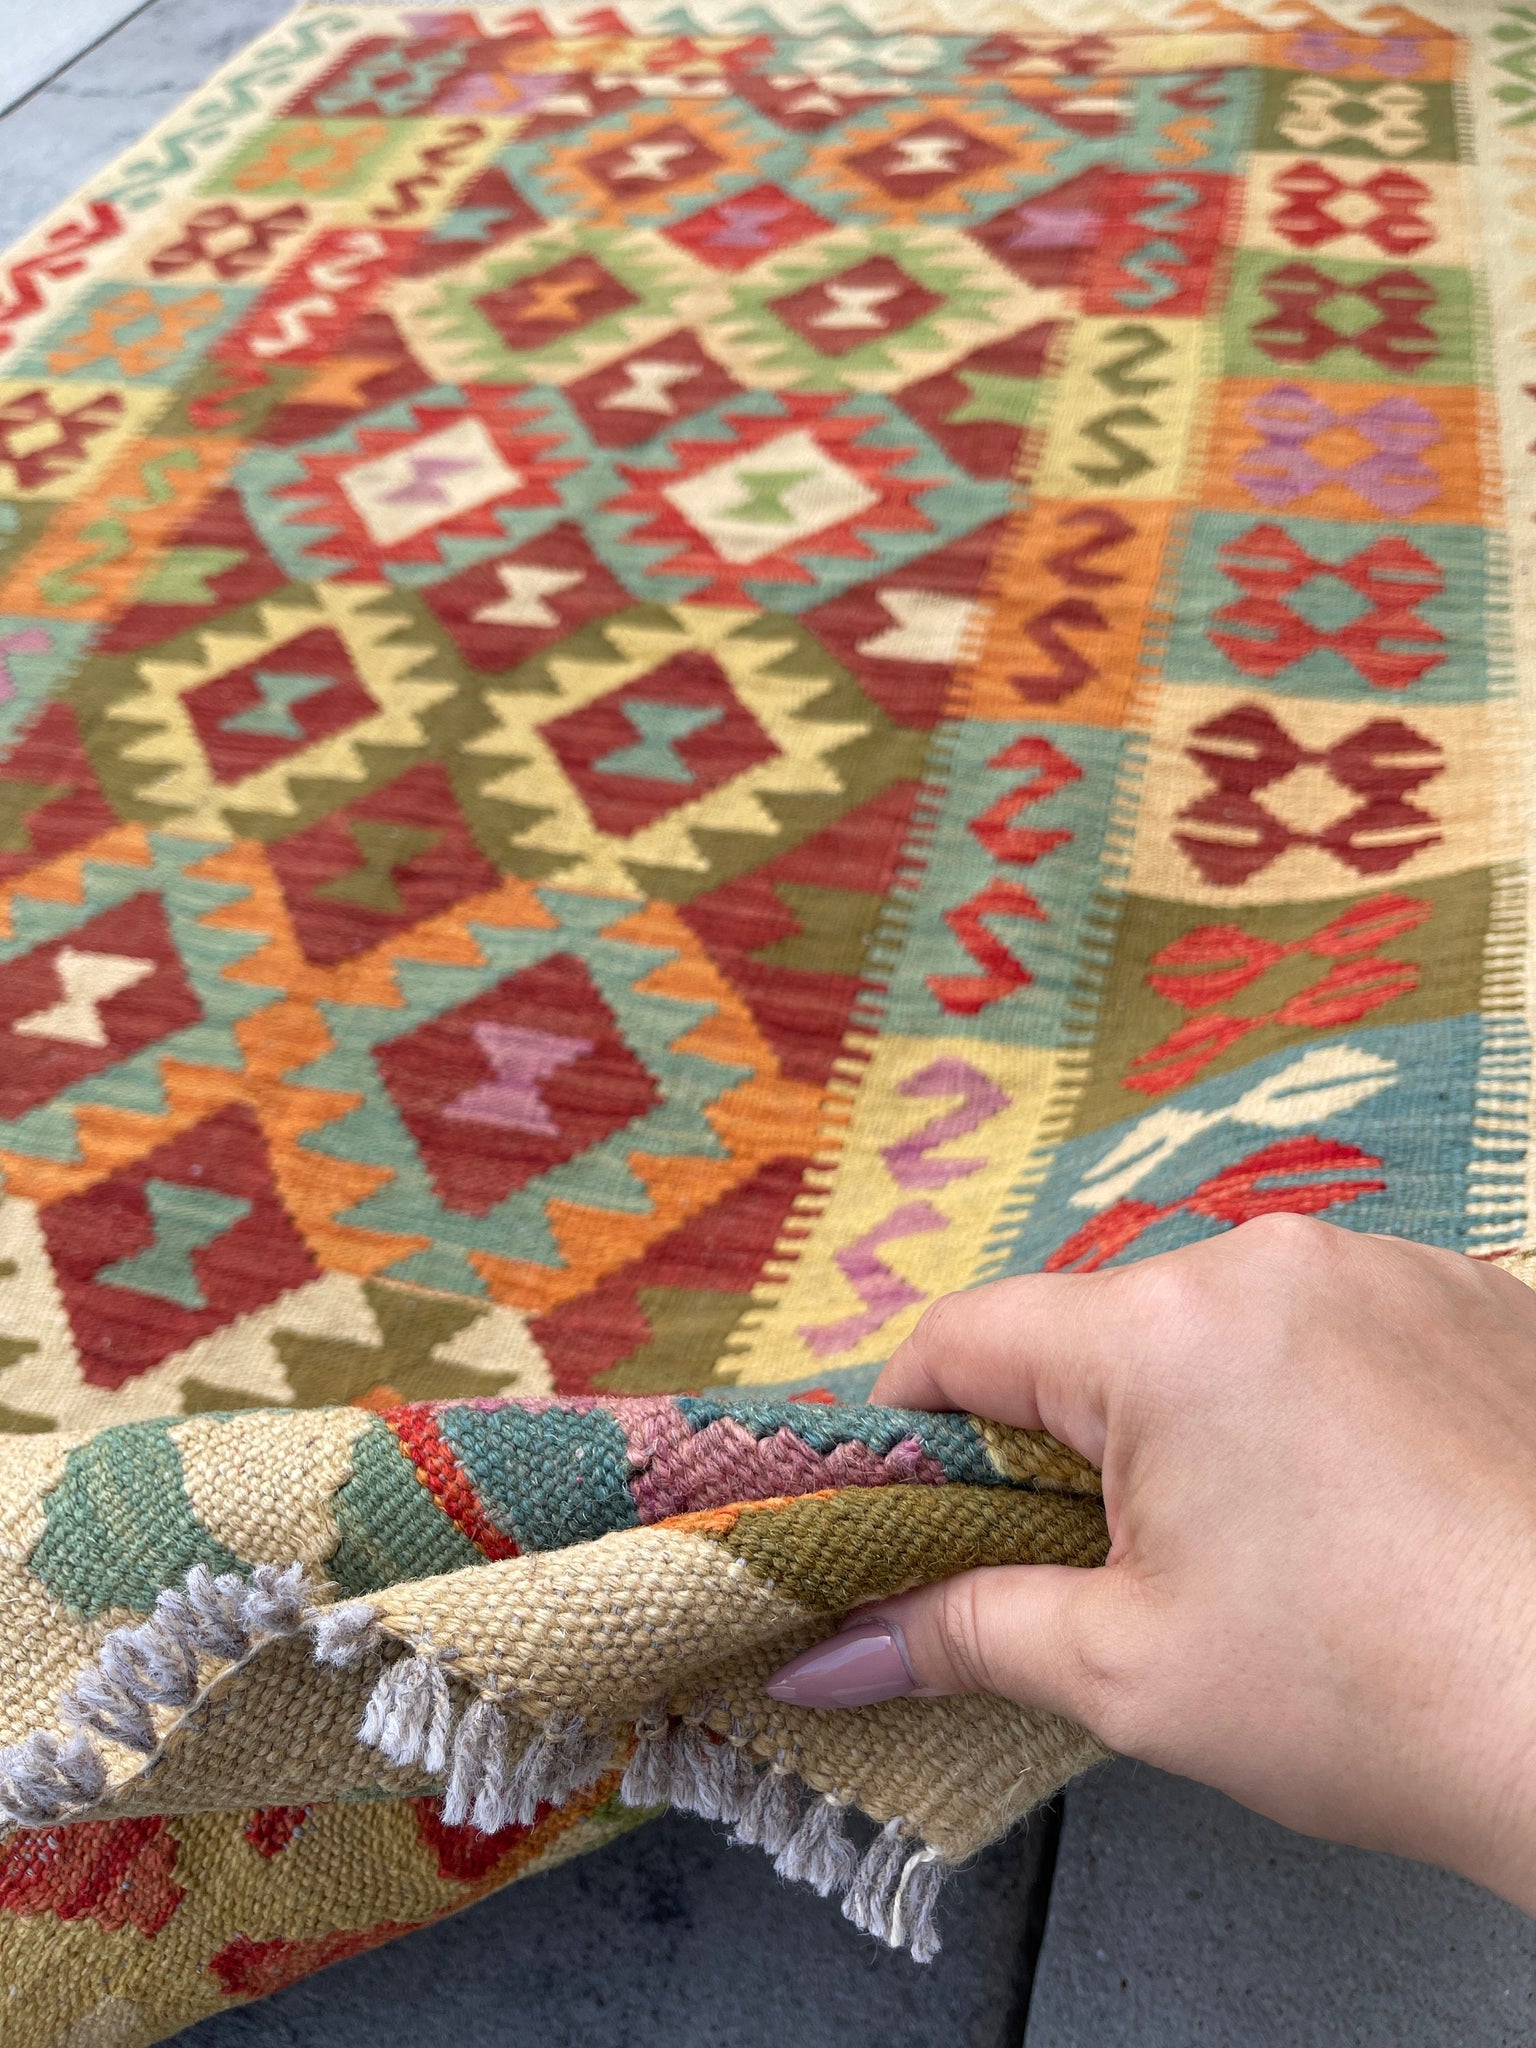 4x6 (120x180) Handmade Afghan Kilim Rug | Beige Brick Red Orange Turquoise Colorful | Flatweave Tribal Turkish Moroccan Oriental Boho Wool